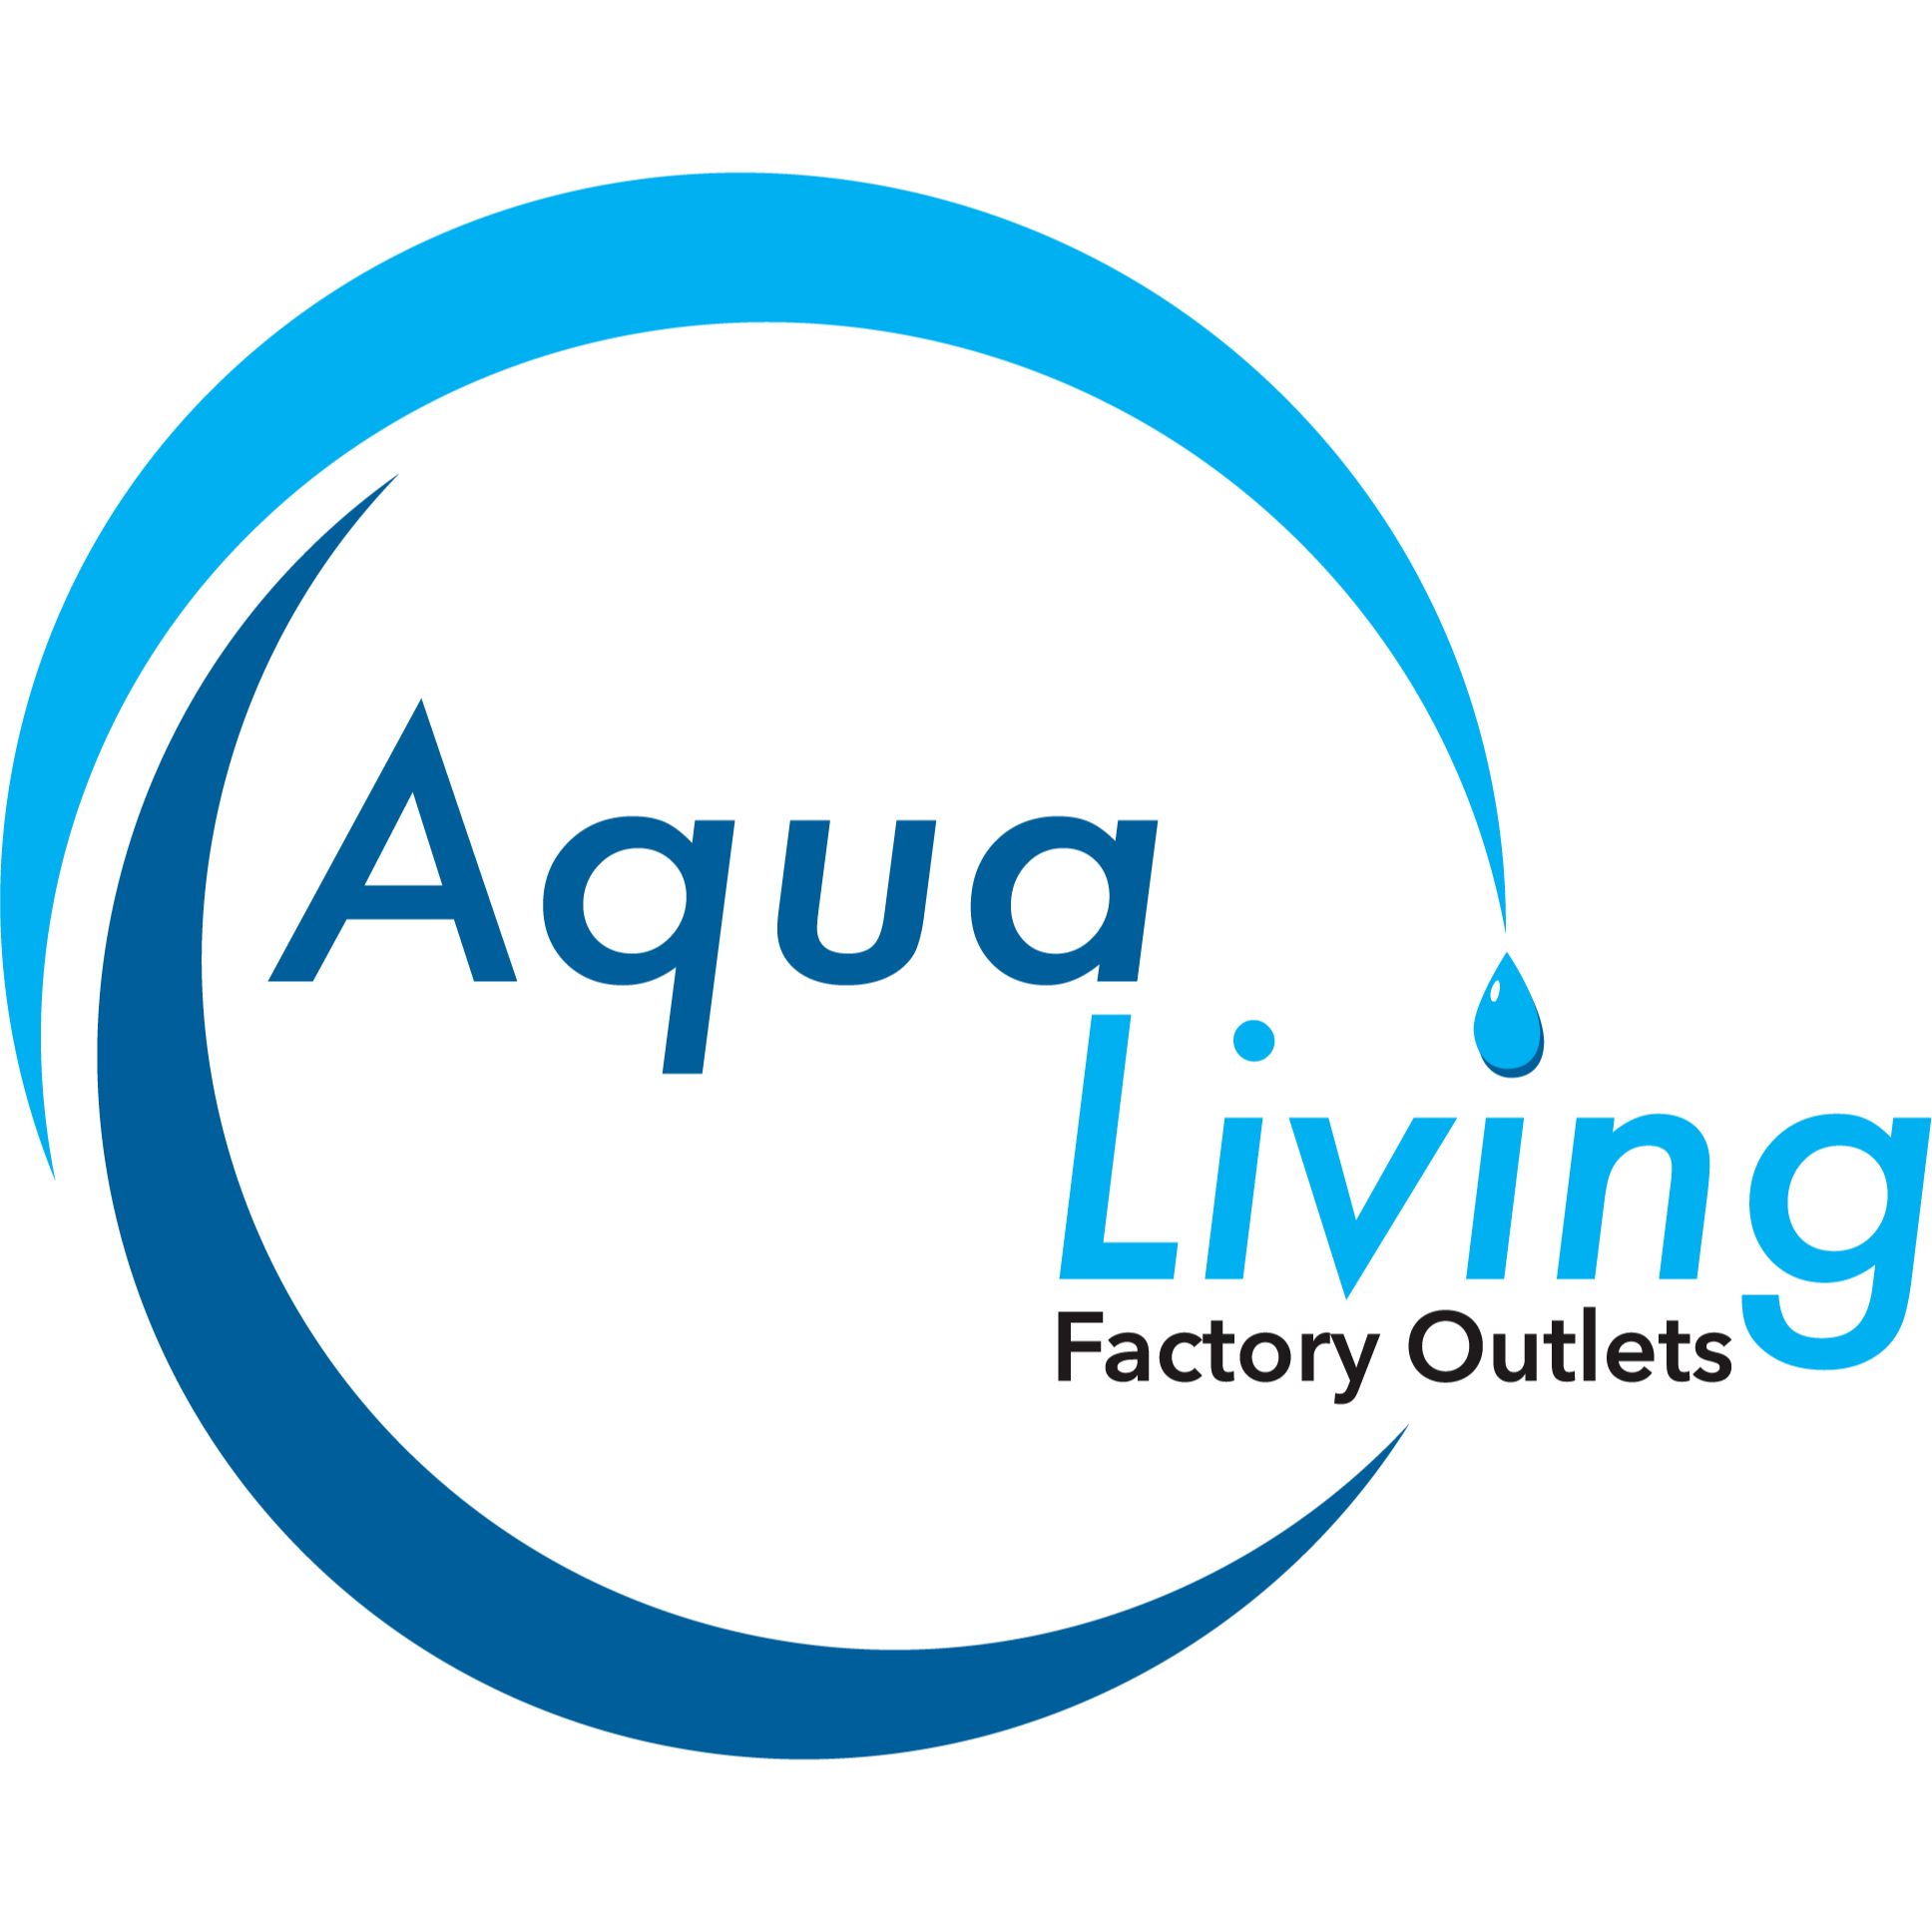 Aqua Living Factory Outlets - Johnson City, TN 37601 - (423)806-0081 | ShowMeLocal.com